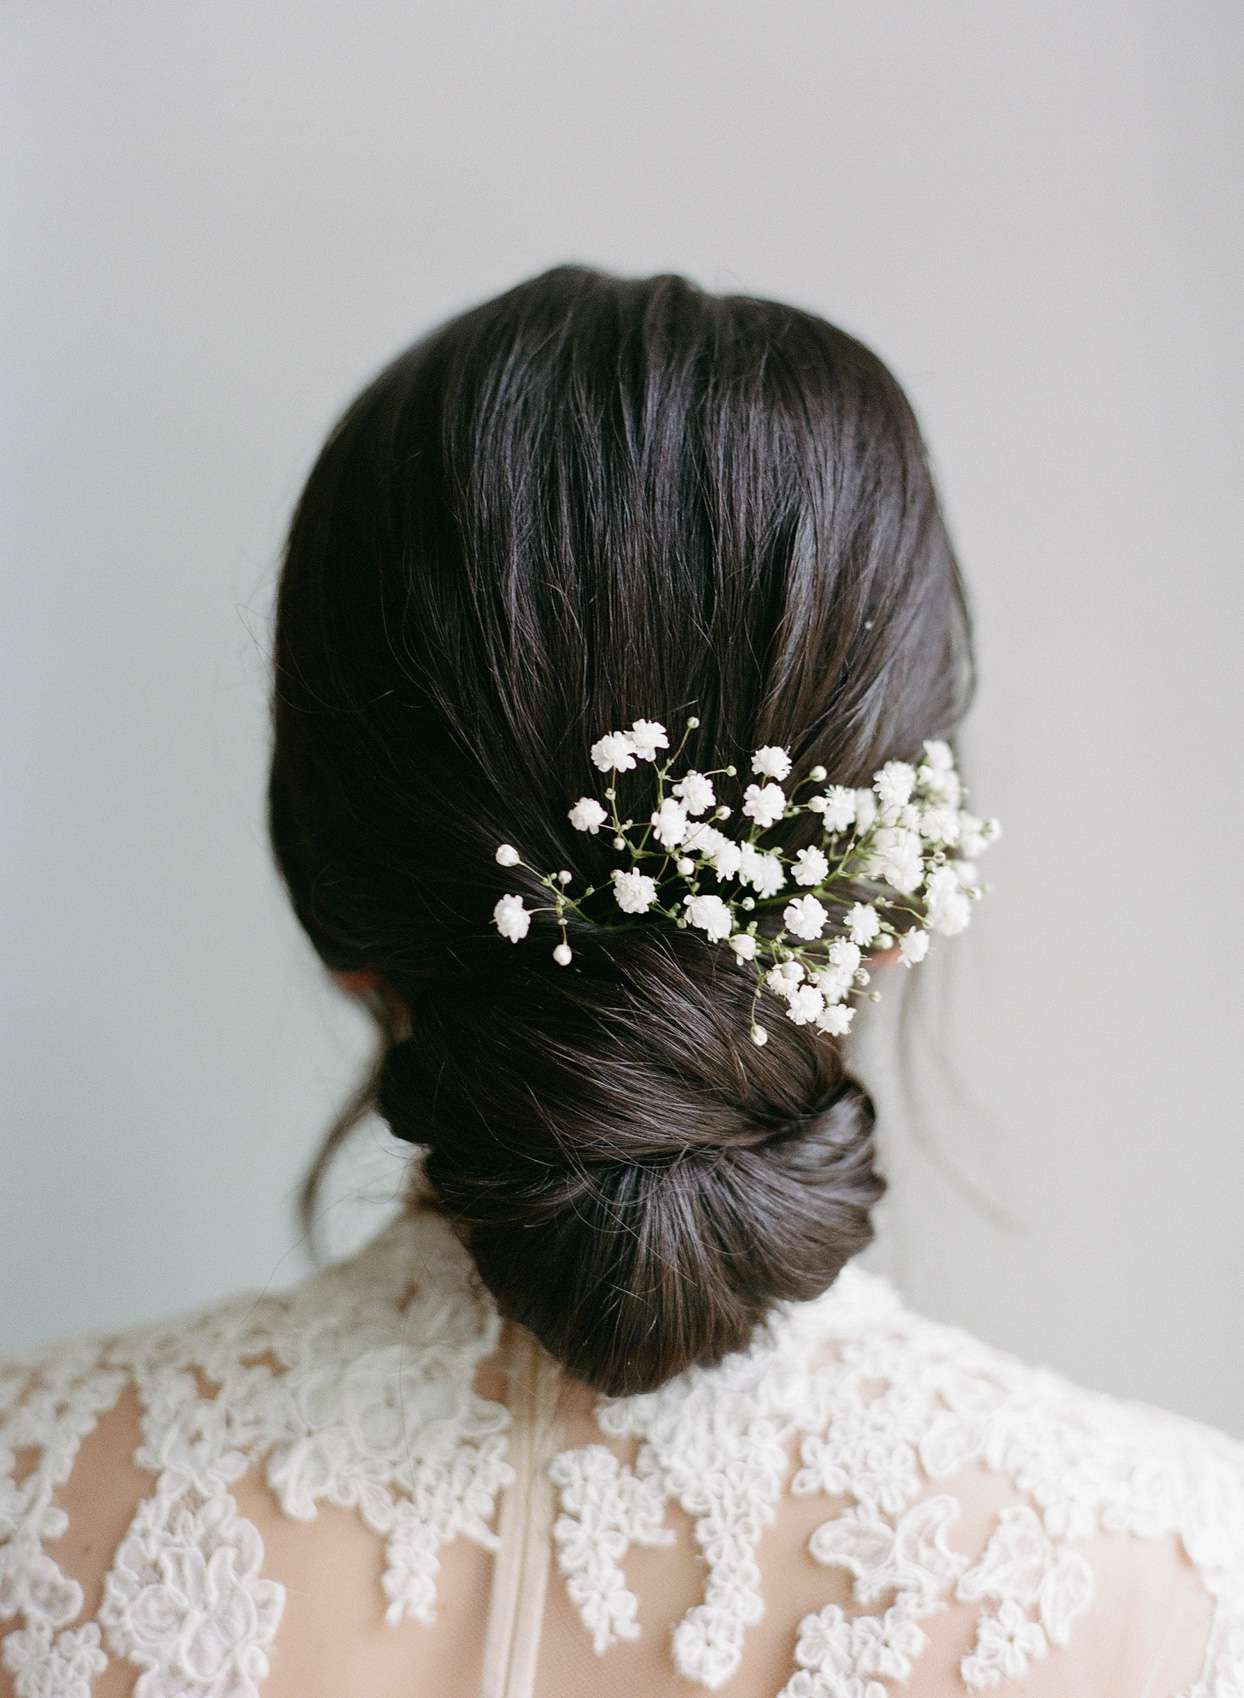 bride's hair in twist bun with flowers